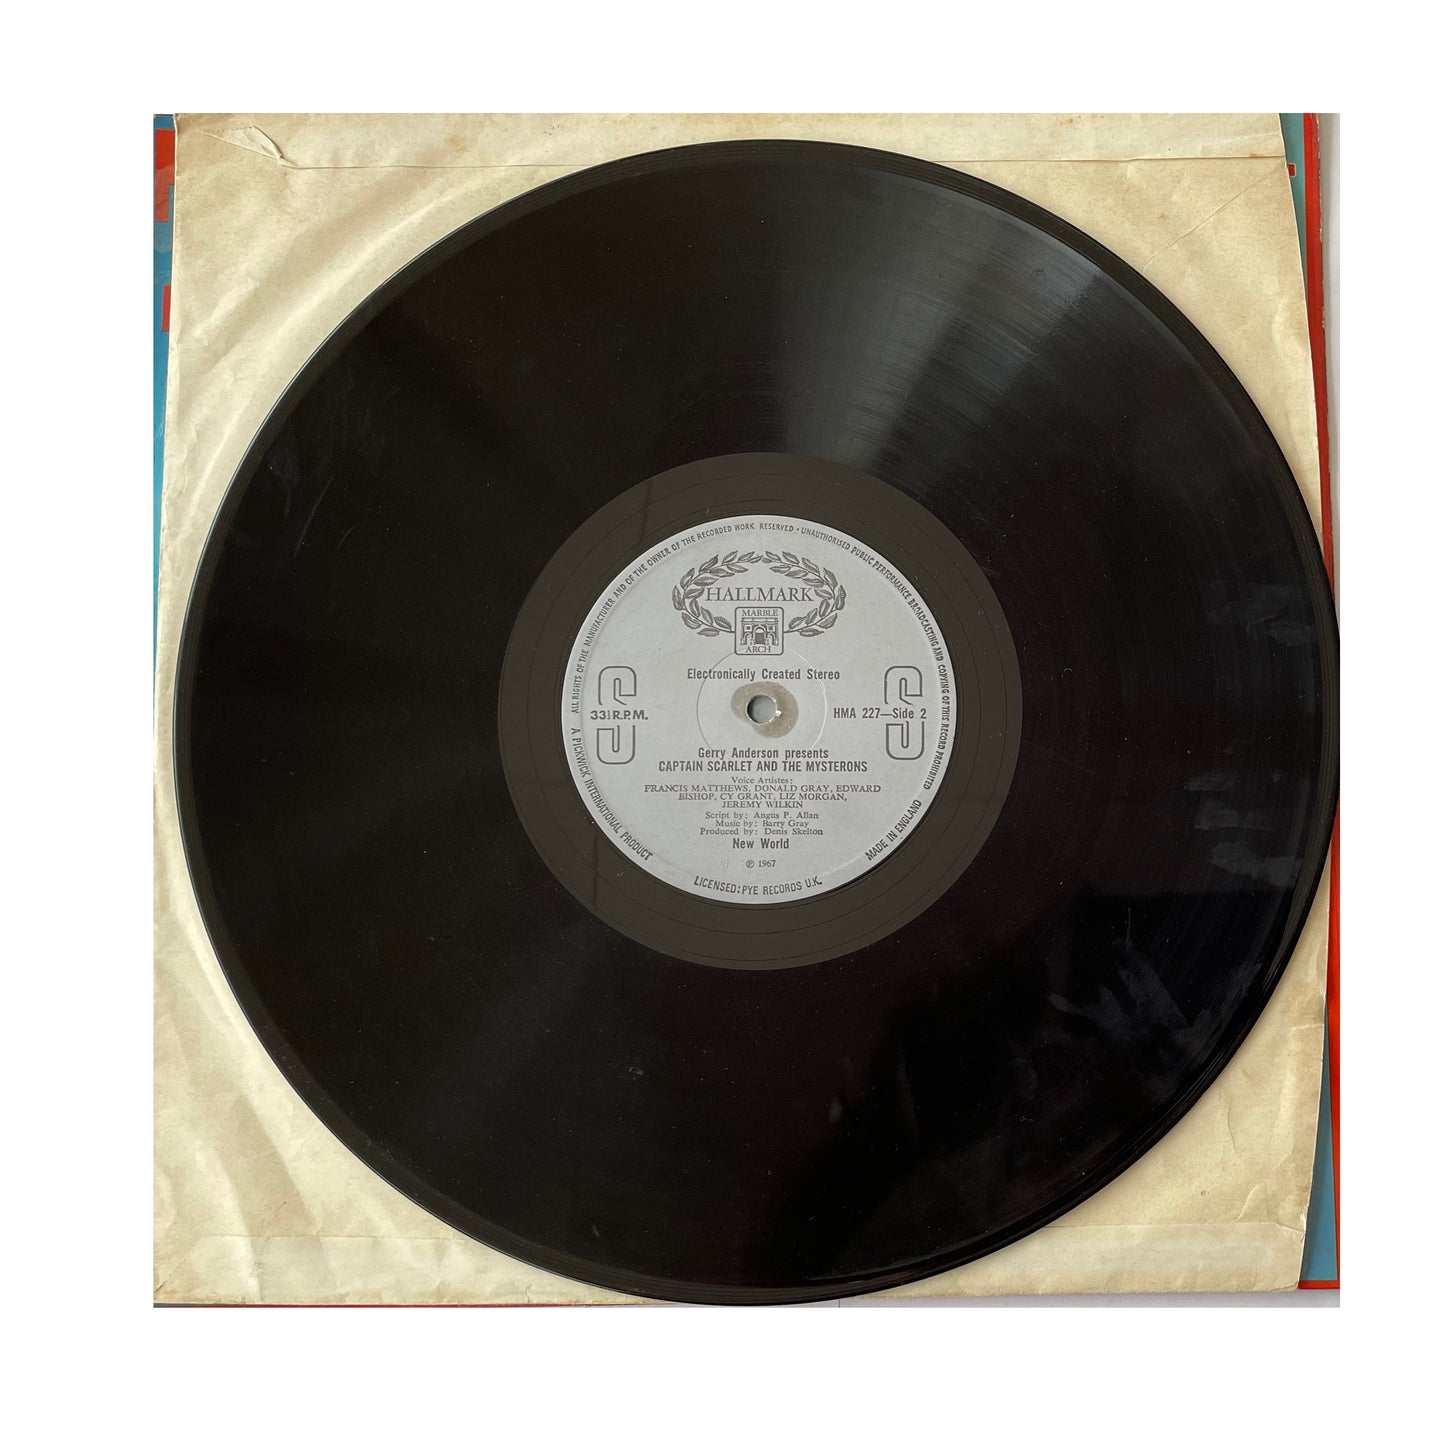 Vintage 1967 Gerry Andersons Presents - Thunderbirds & Captain Scarlet - 33RPM LP Album Record